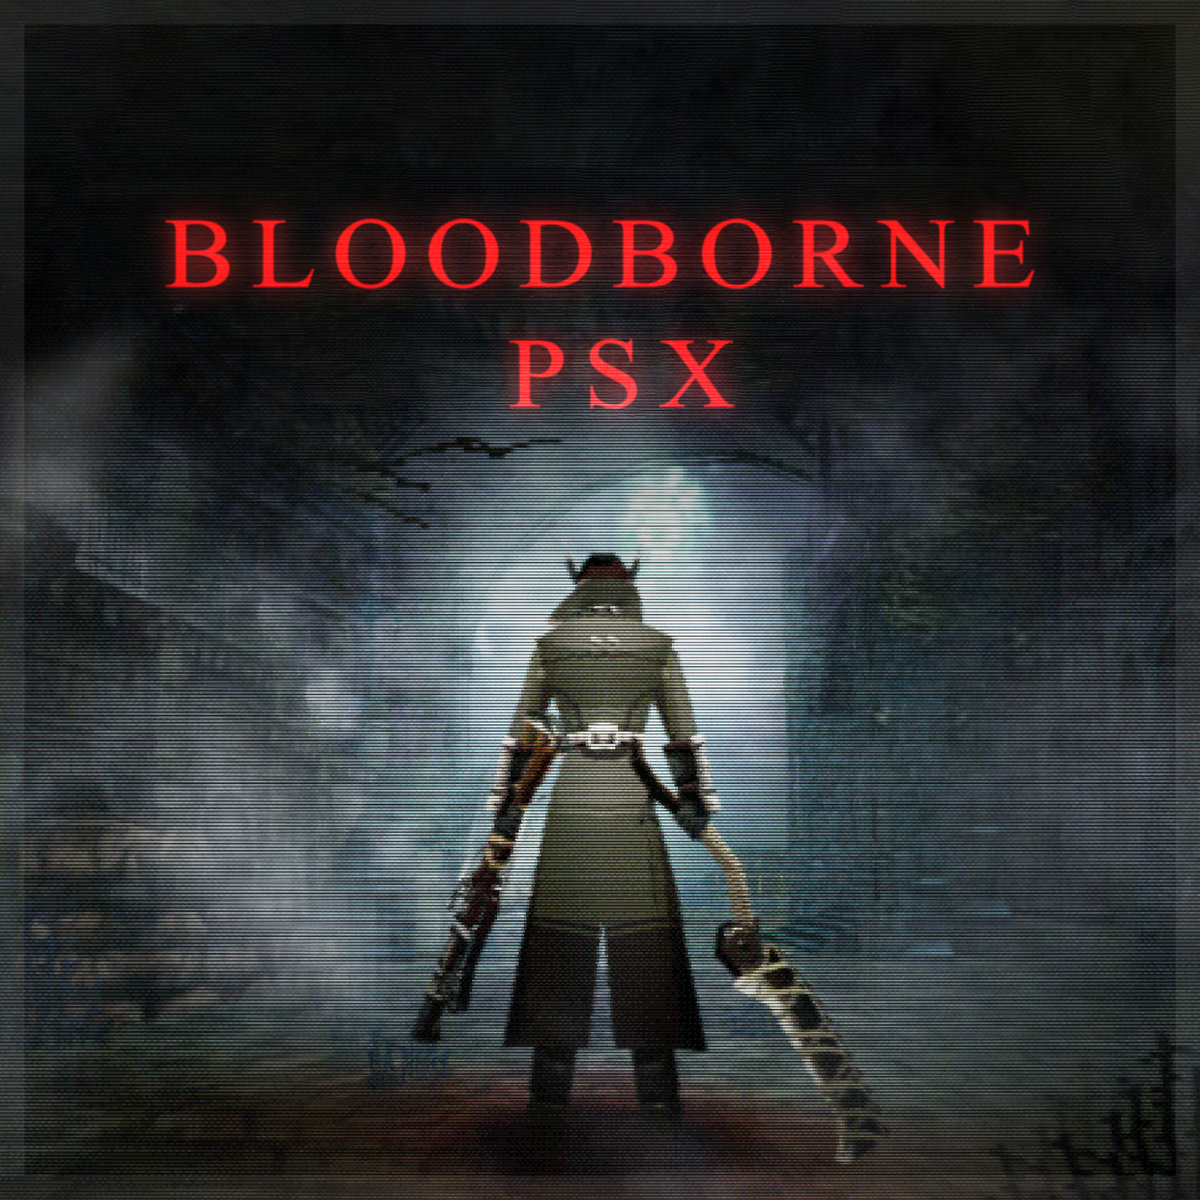 Bloodborne PSX is an impressive fan-made PS1 'demake' of